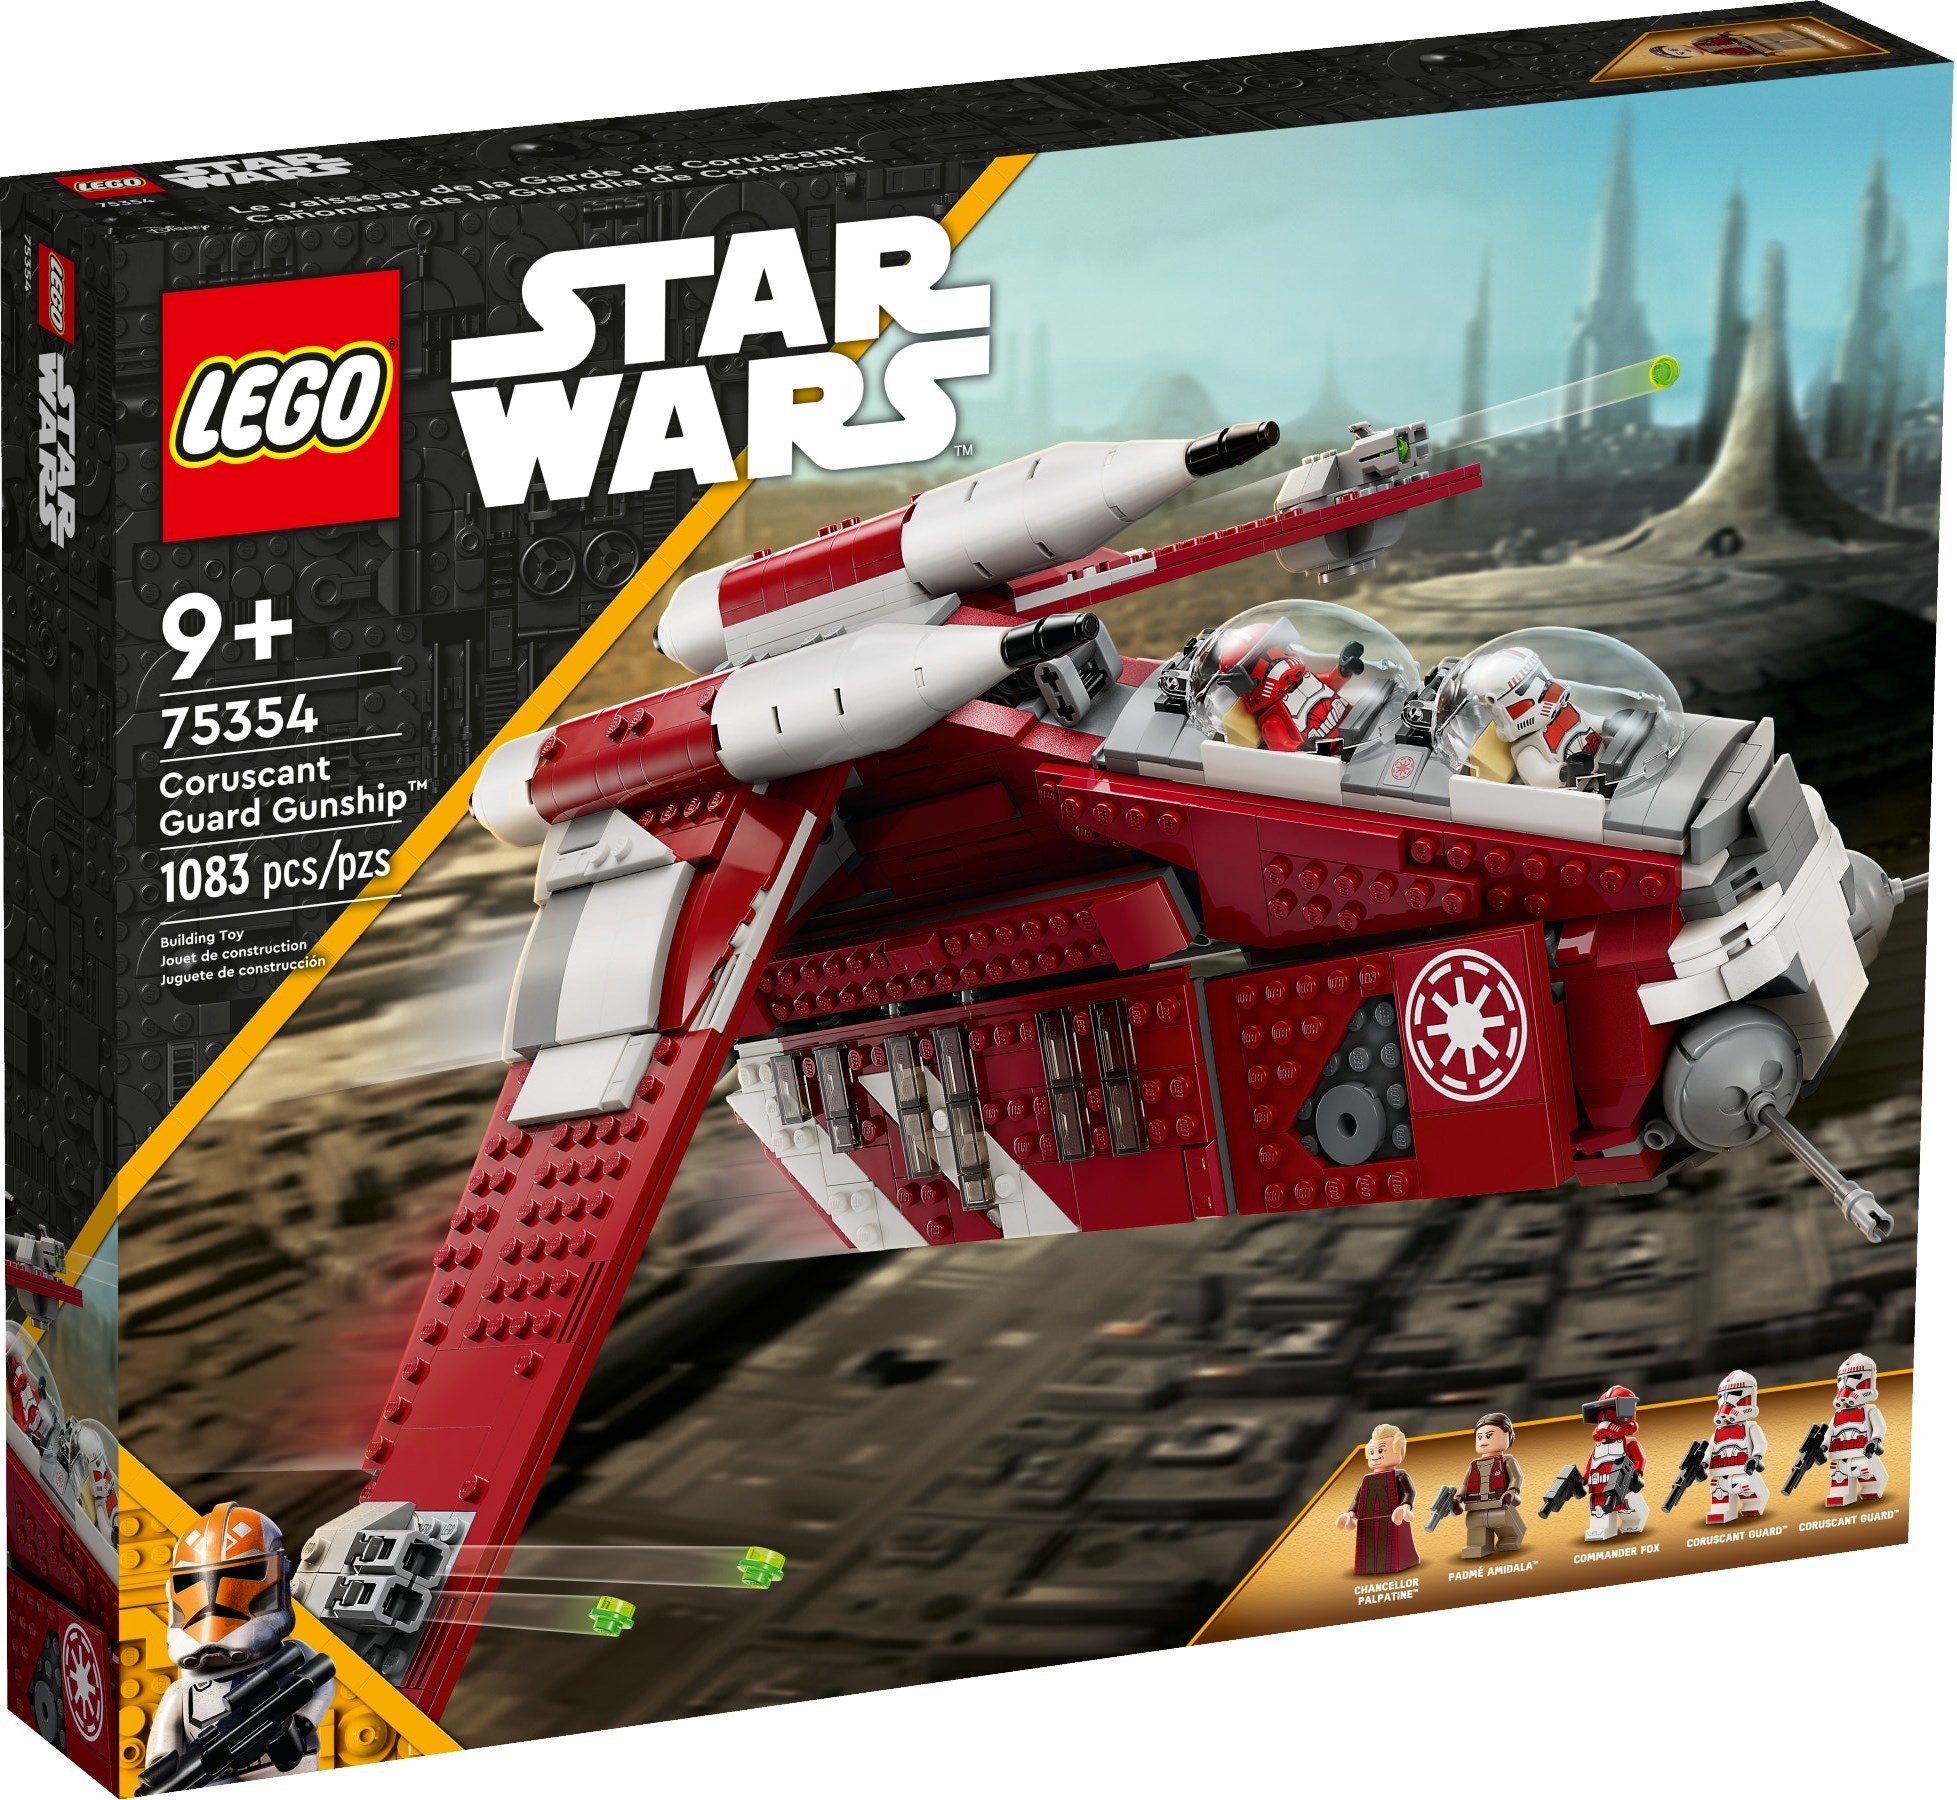 LEGO Star Wars Coruscant Guard Gunship (75354) Revealed The Brick Fan